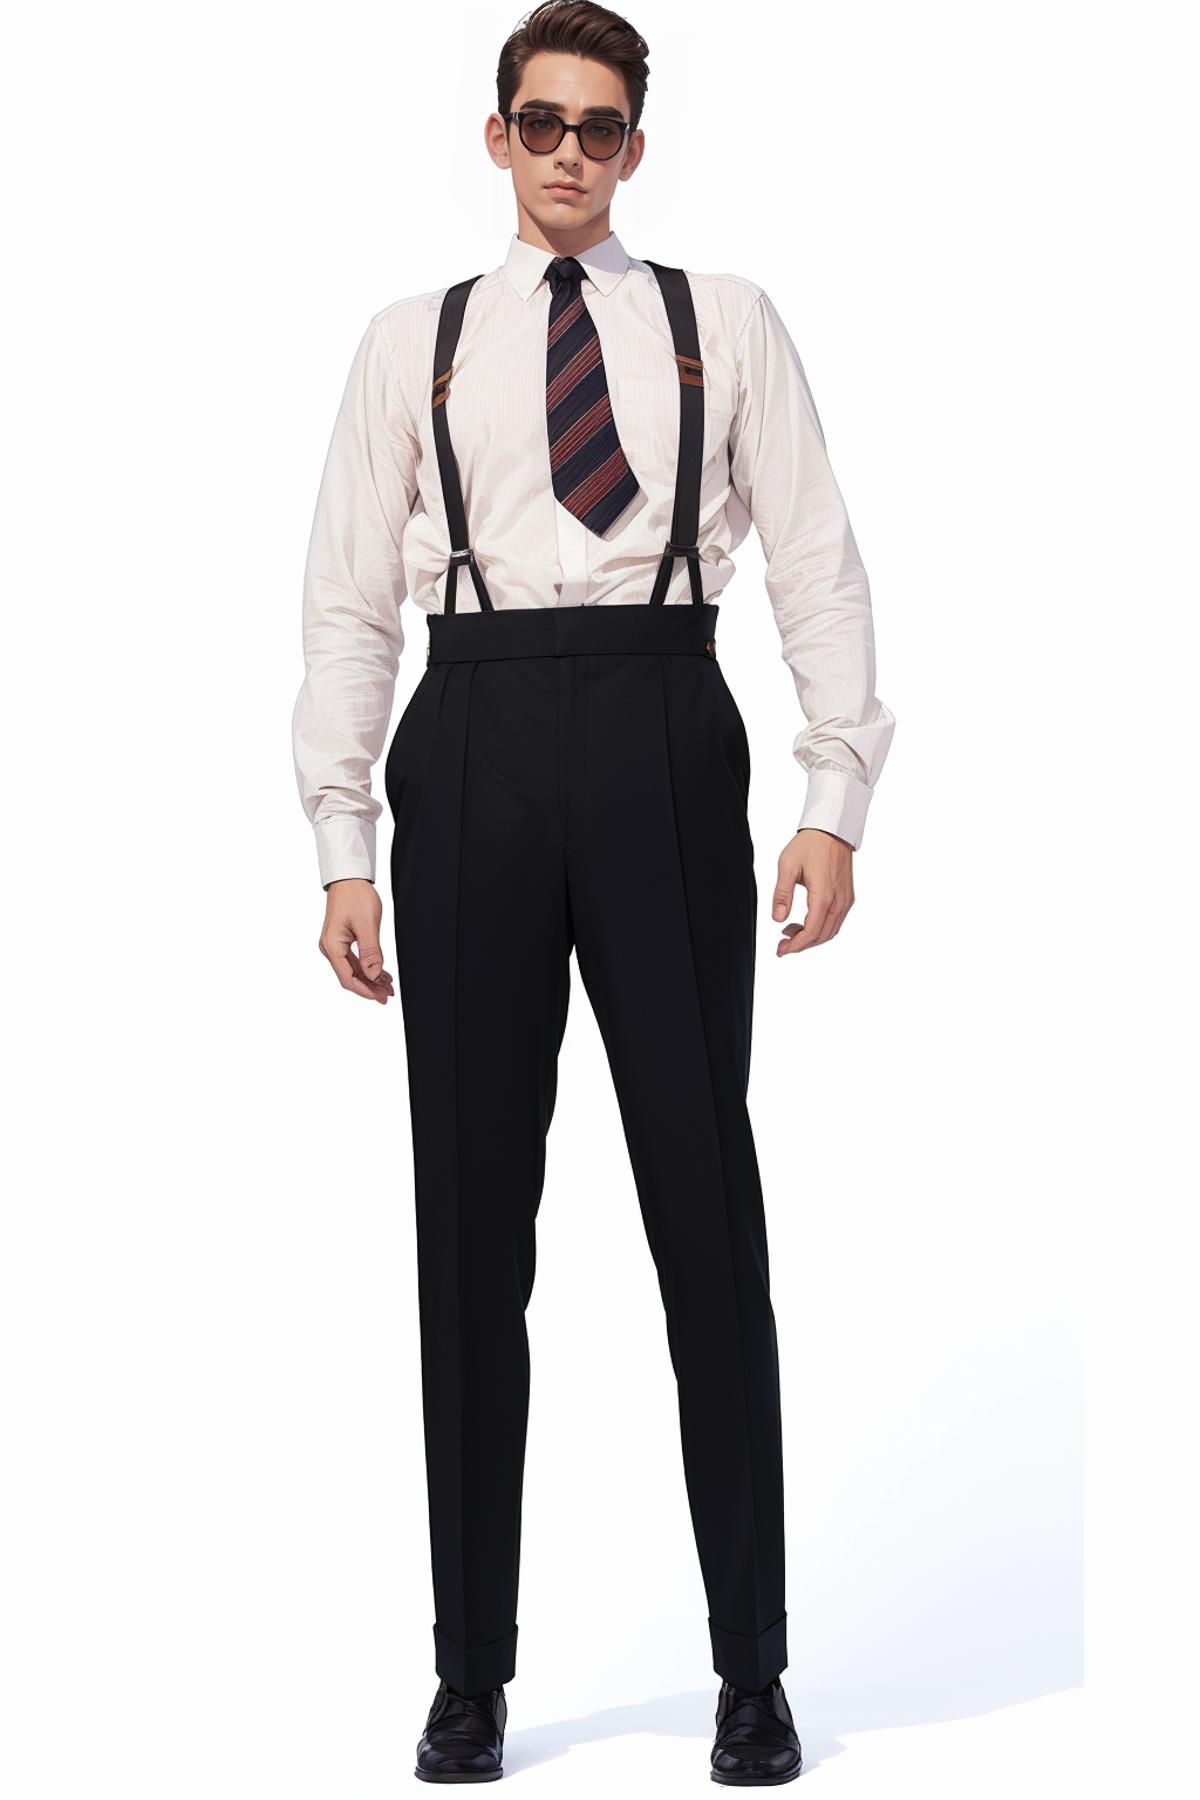 Retro Men's Suspenders Outfit image by freckledvixon